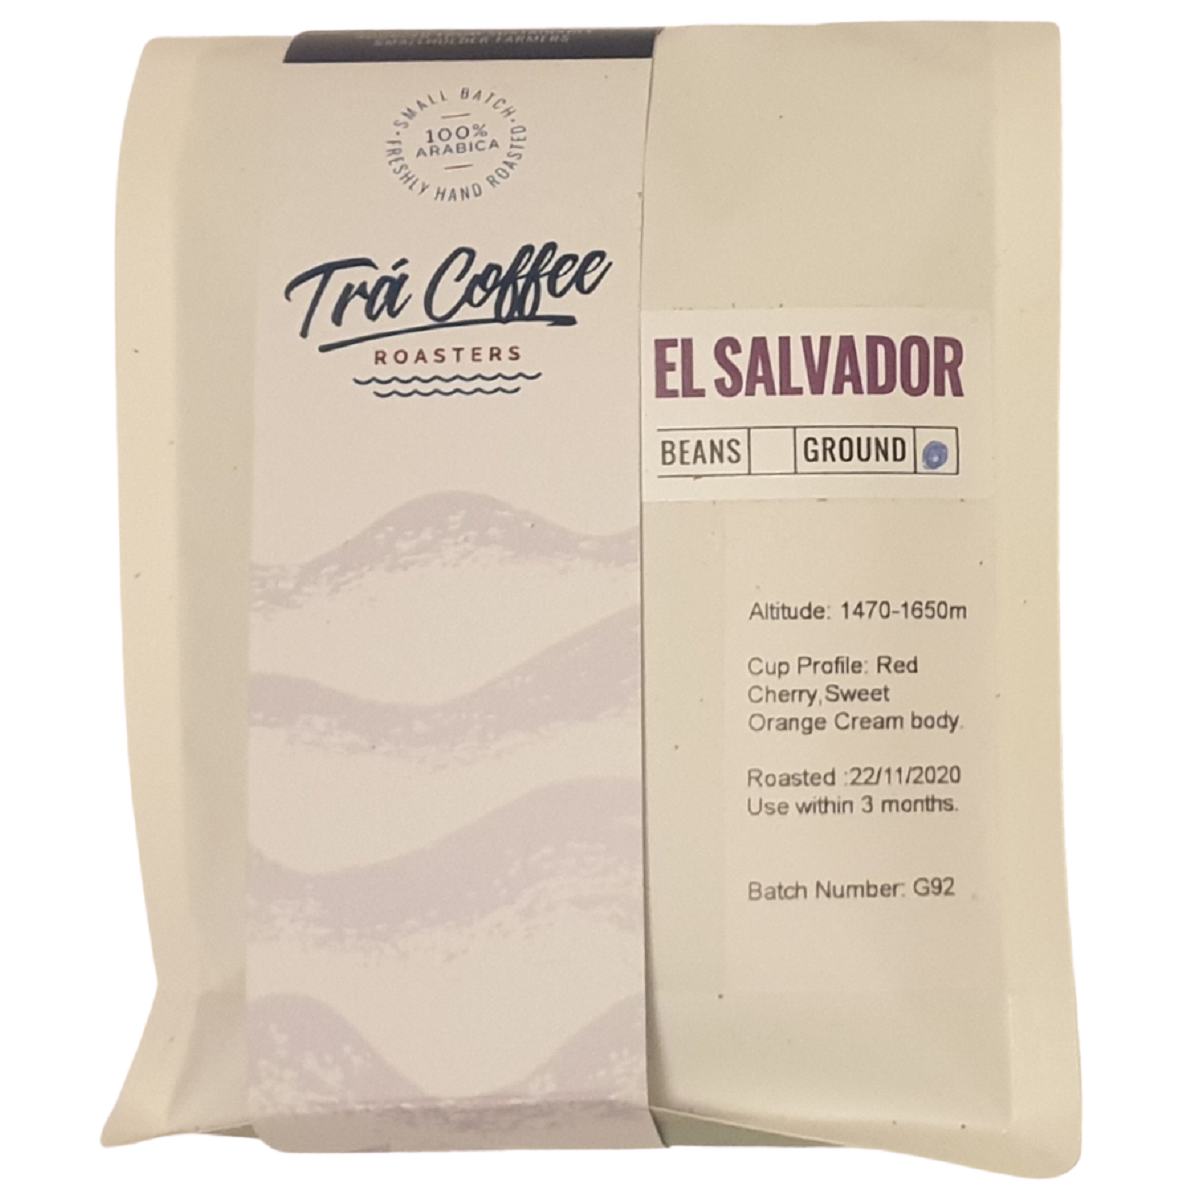 Trá Coffee Roasters El Salvador Beans Ground 250g